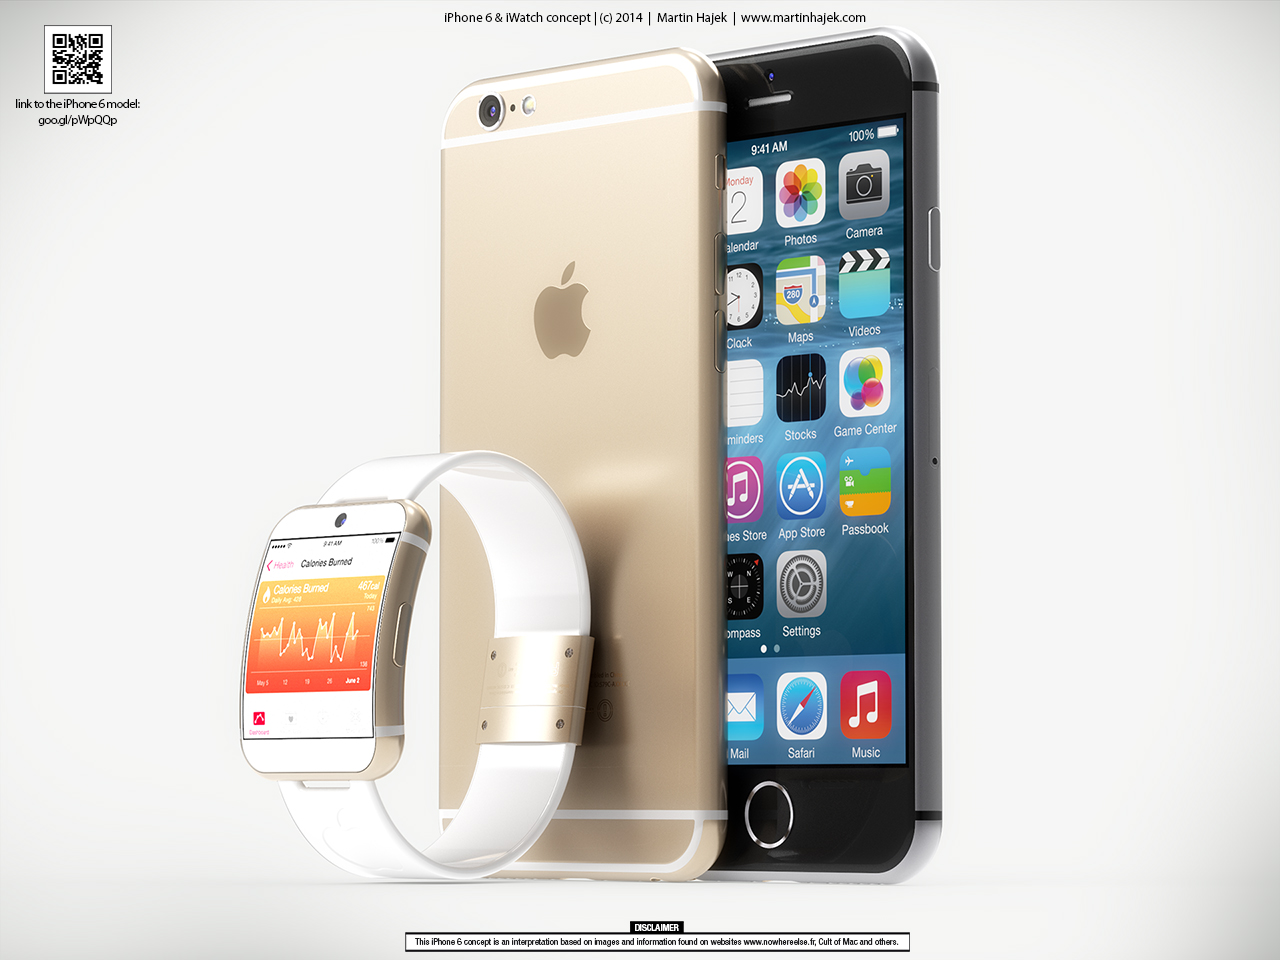 Montre Apple iWatch iPhone 6 01